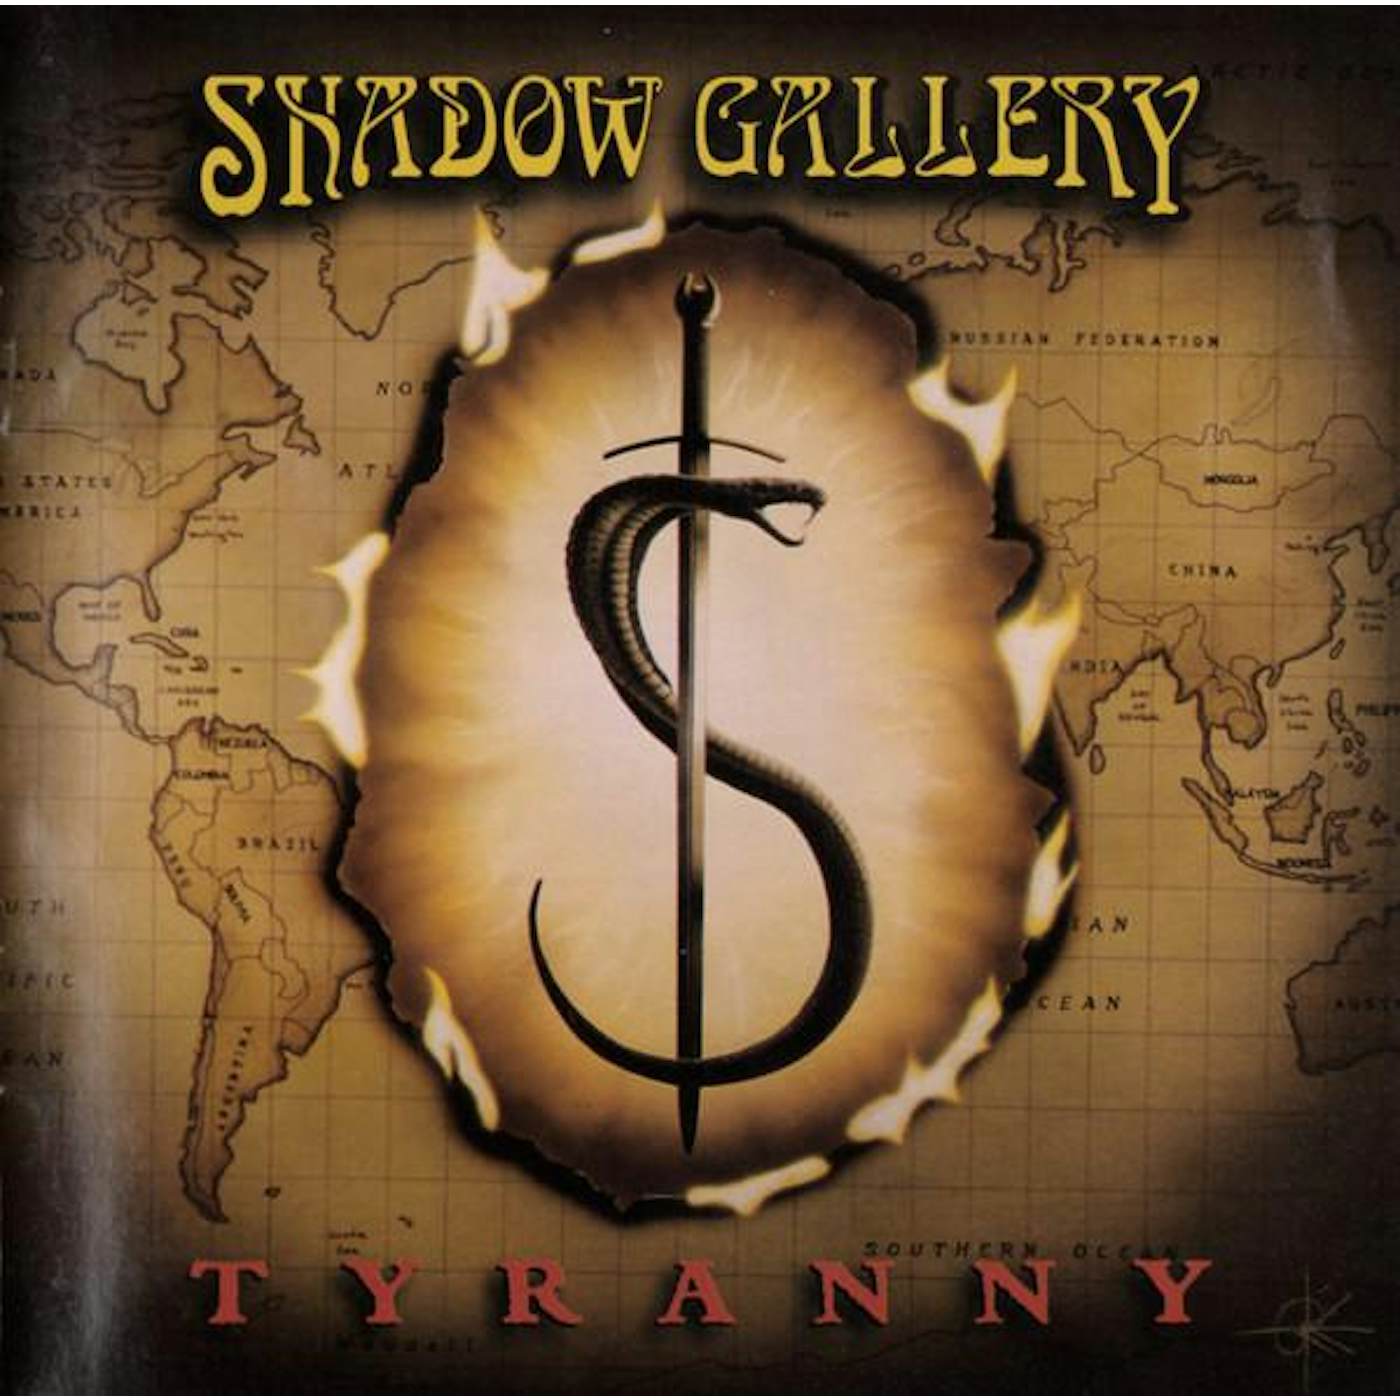 Shadow Gallery TYRANNY CD